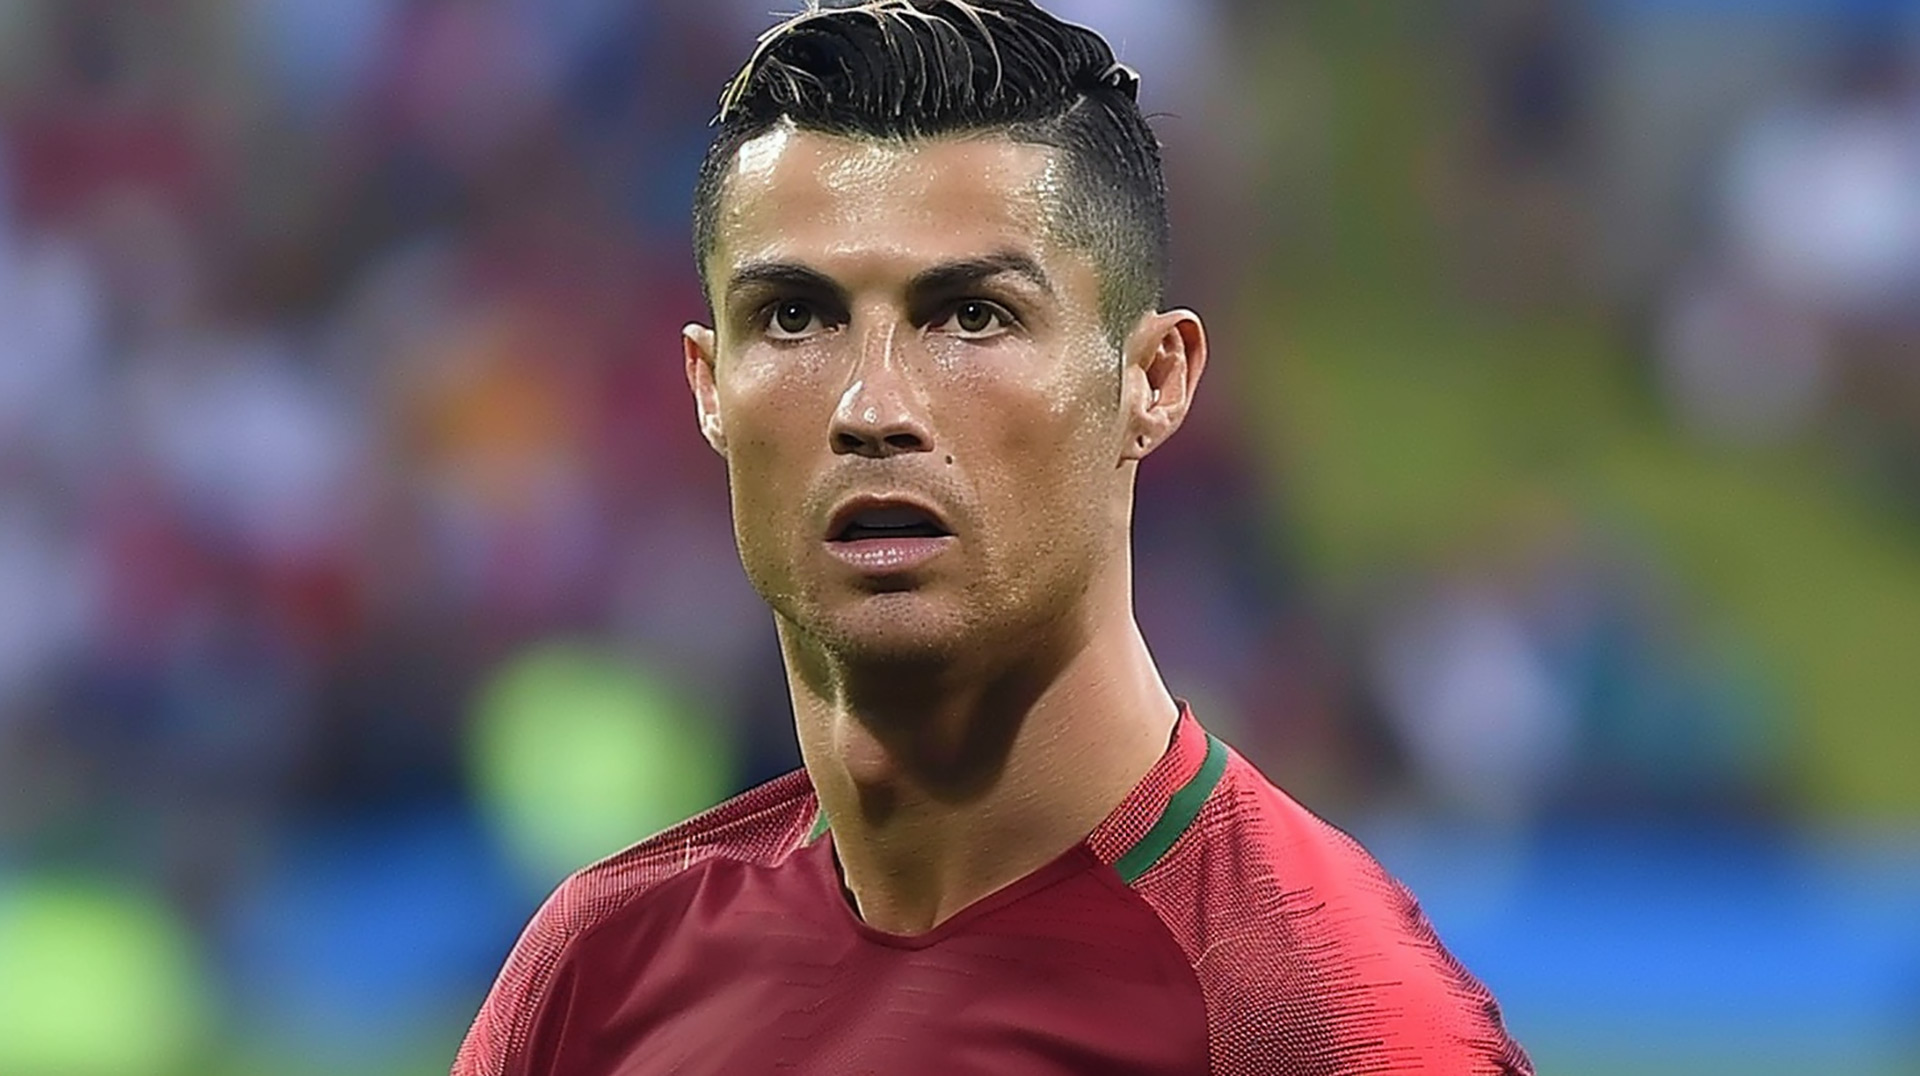 Ronaldo HD Wallpaper: 16:9 Aspect Ratio